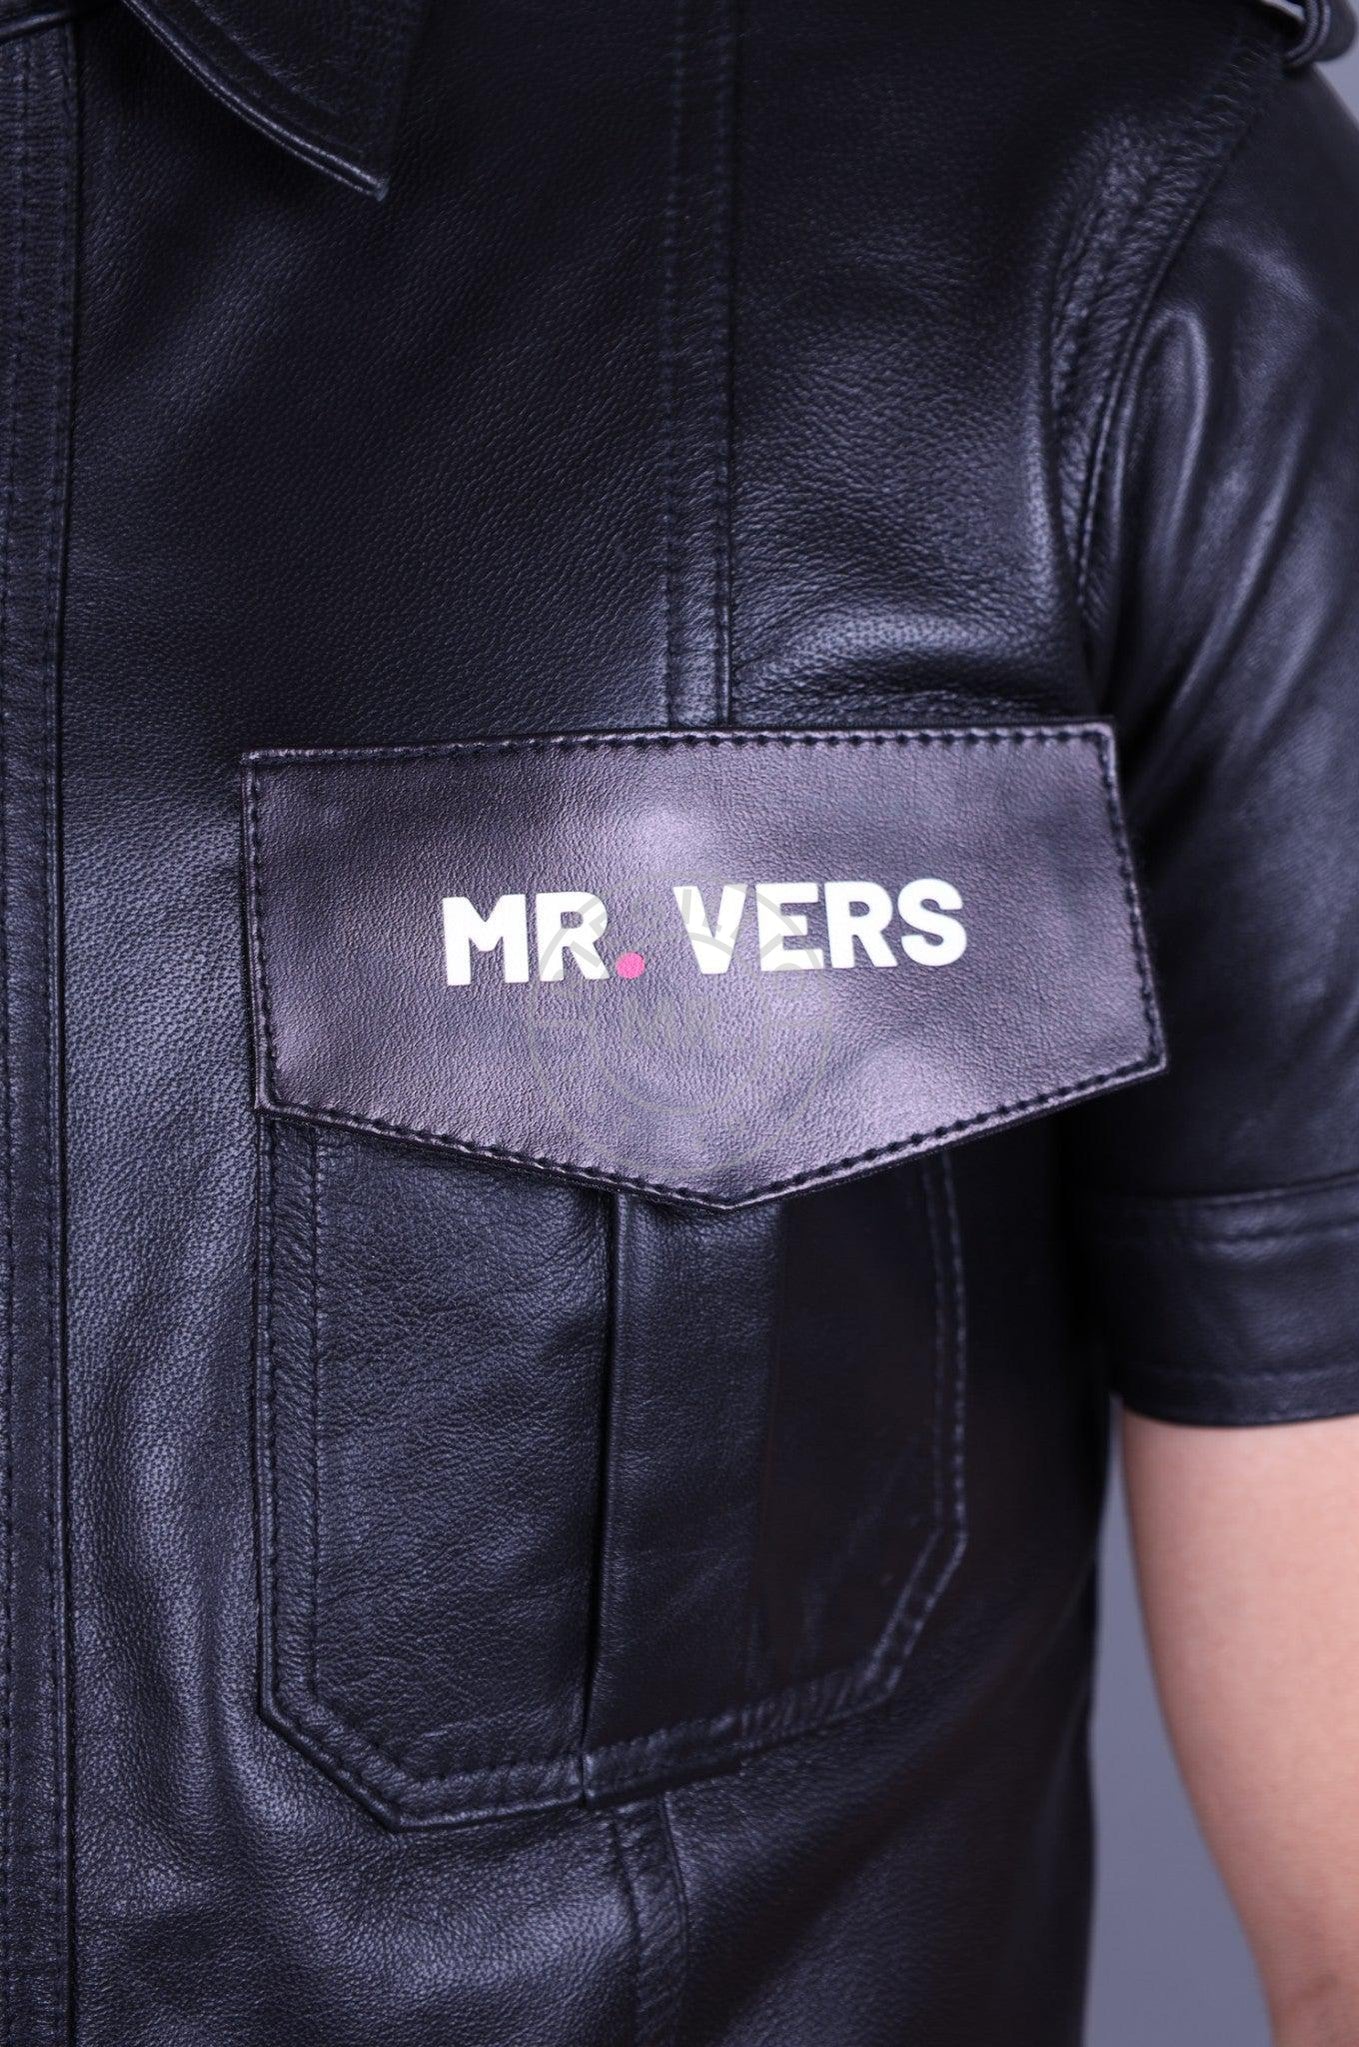 Velcro Patch - MR. VERS-at MR. Riegillio